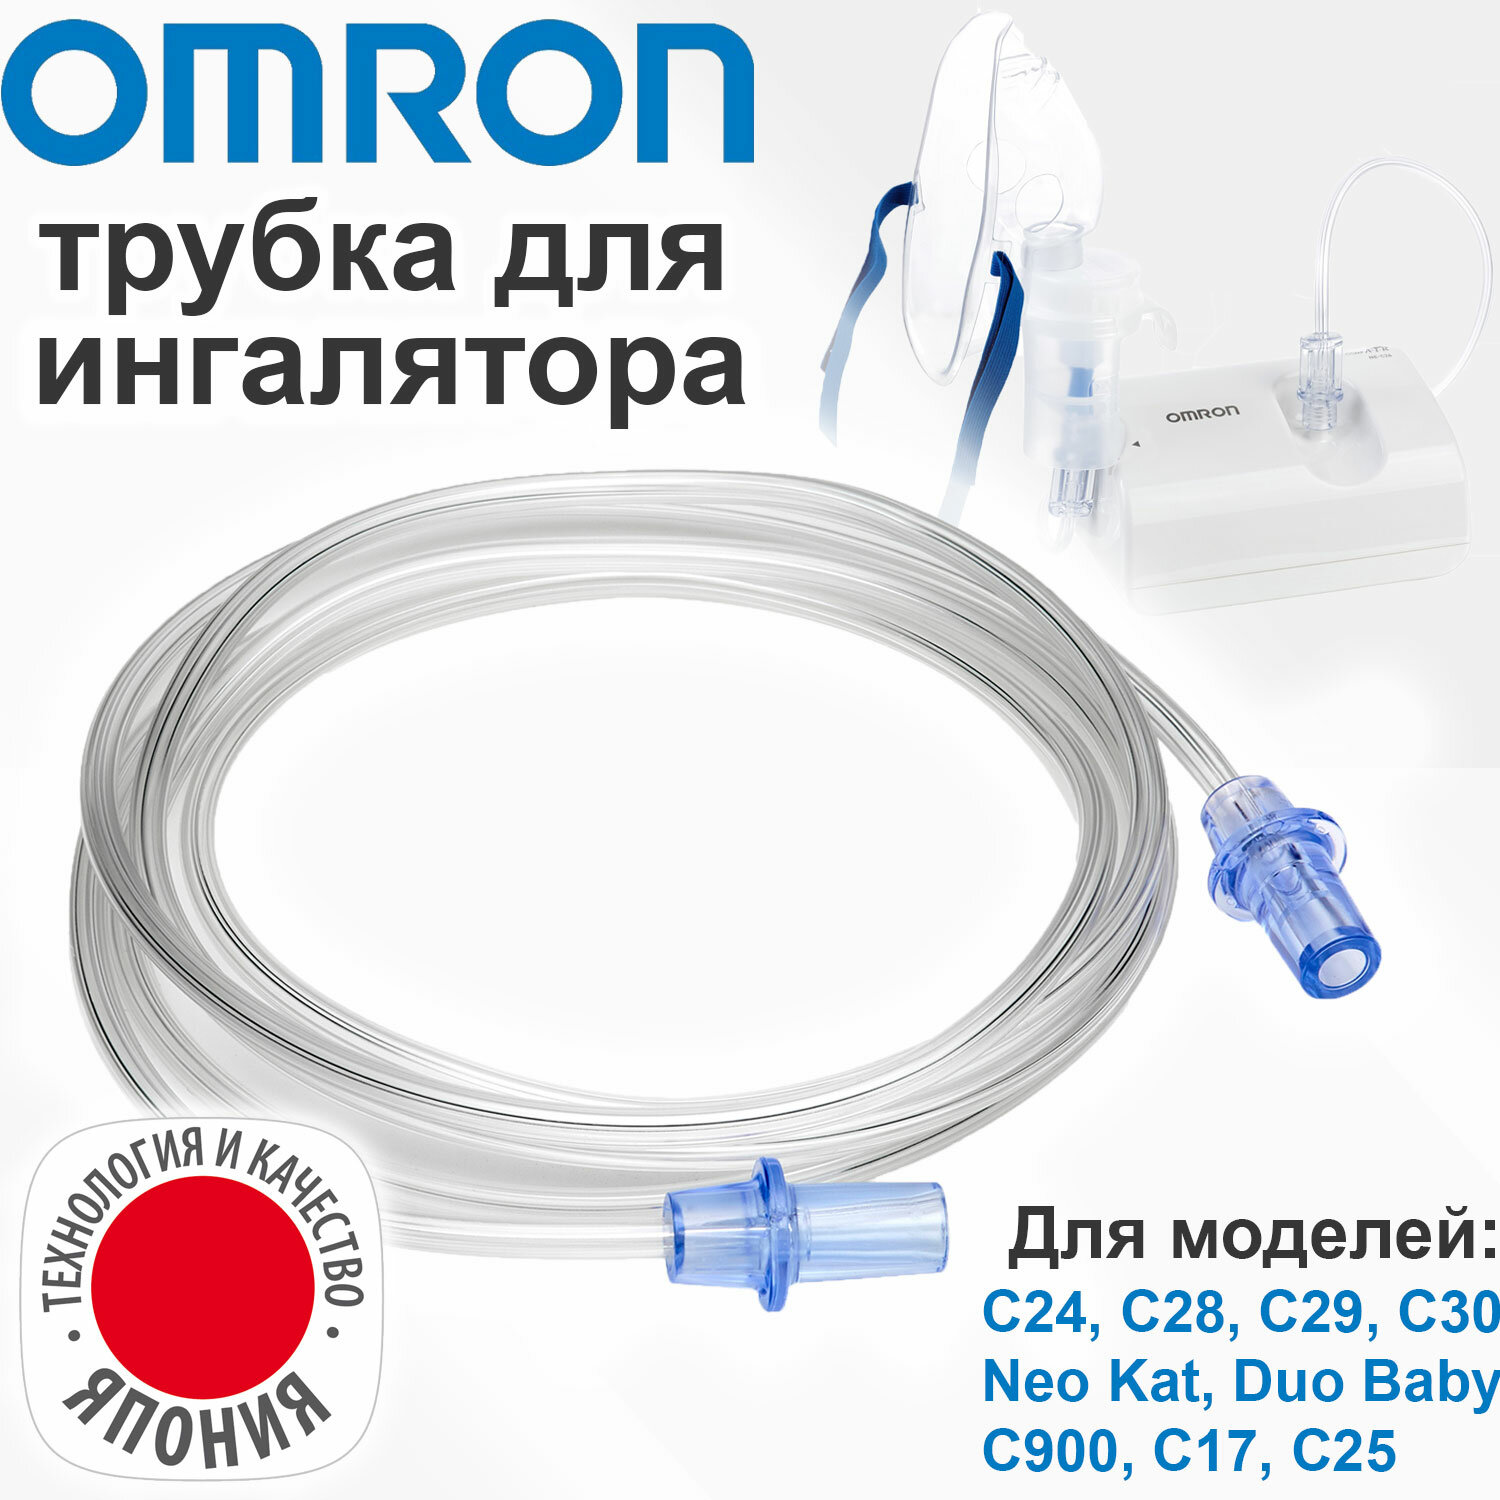 Трубка для ингаляторов OMRON С24, С28, C29, C30, C900, C17, C25, Neo Kat, Duo Baby (воздуховодный шланг для небулайзеров Омрон)